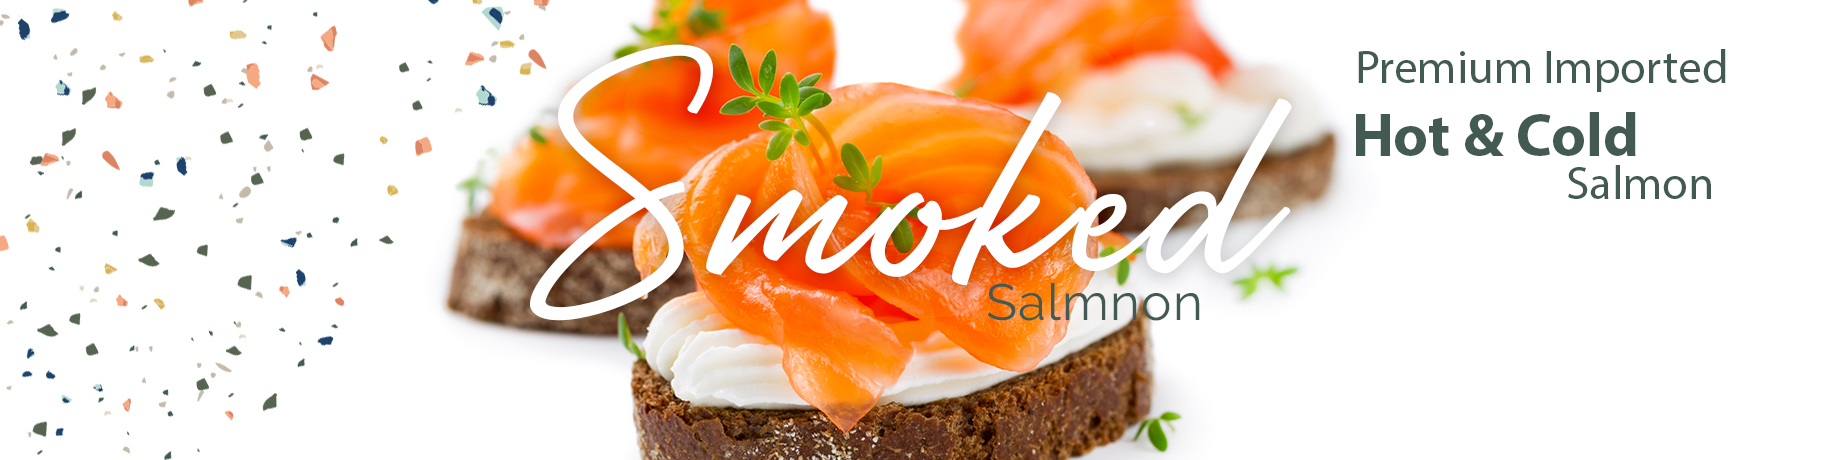 Premium Norwegian Salmon